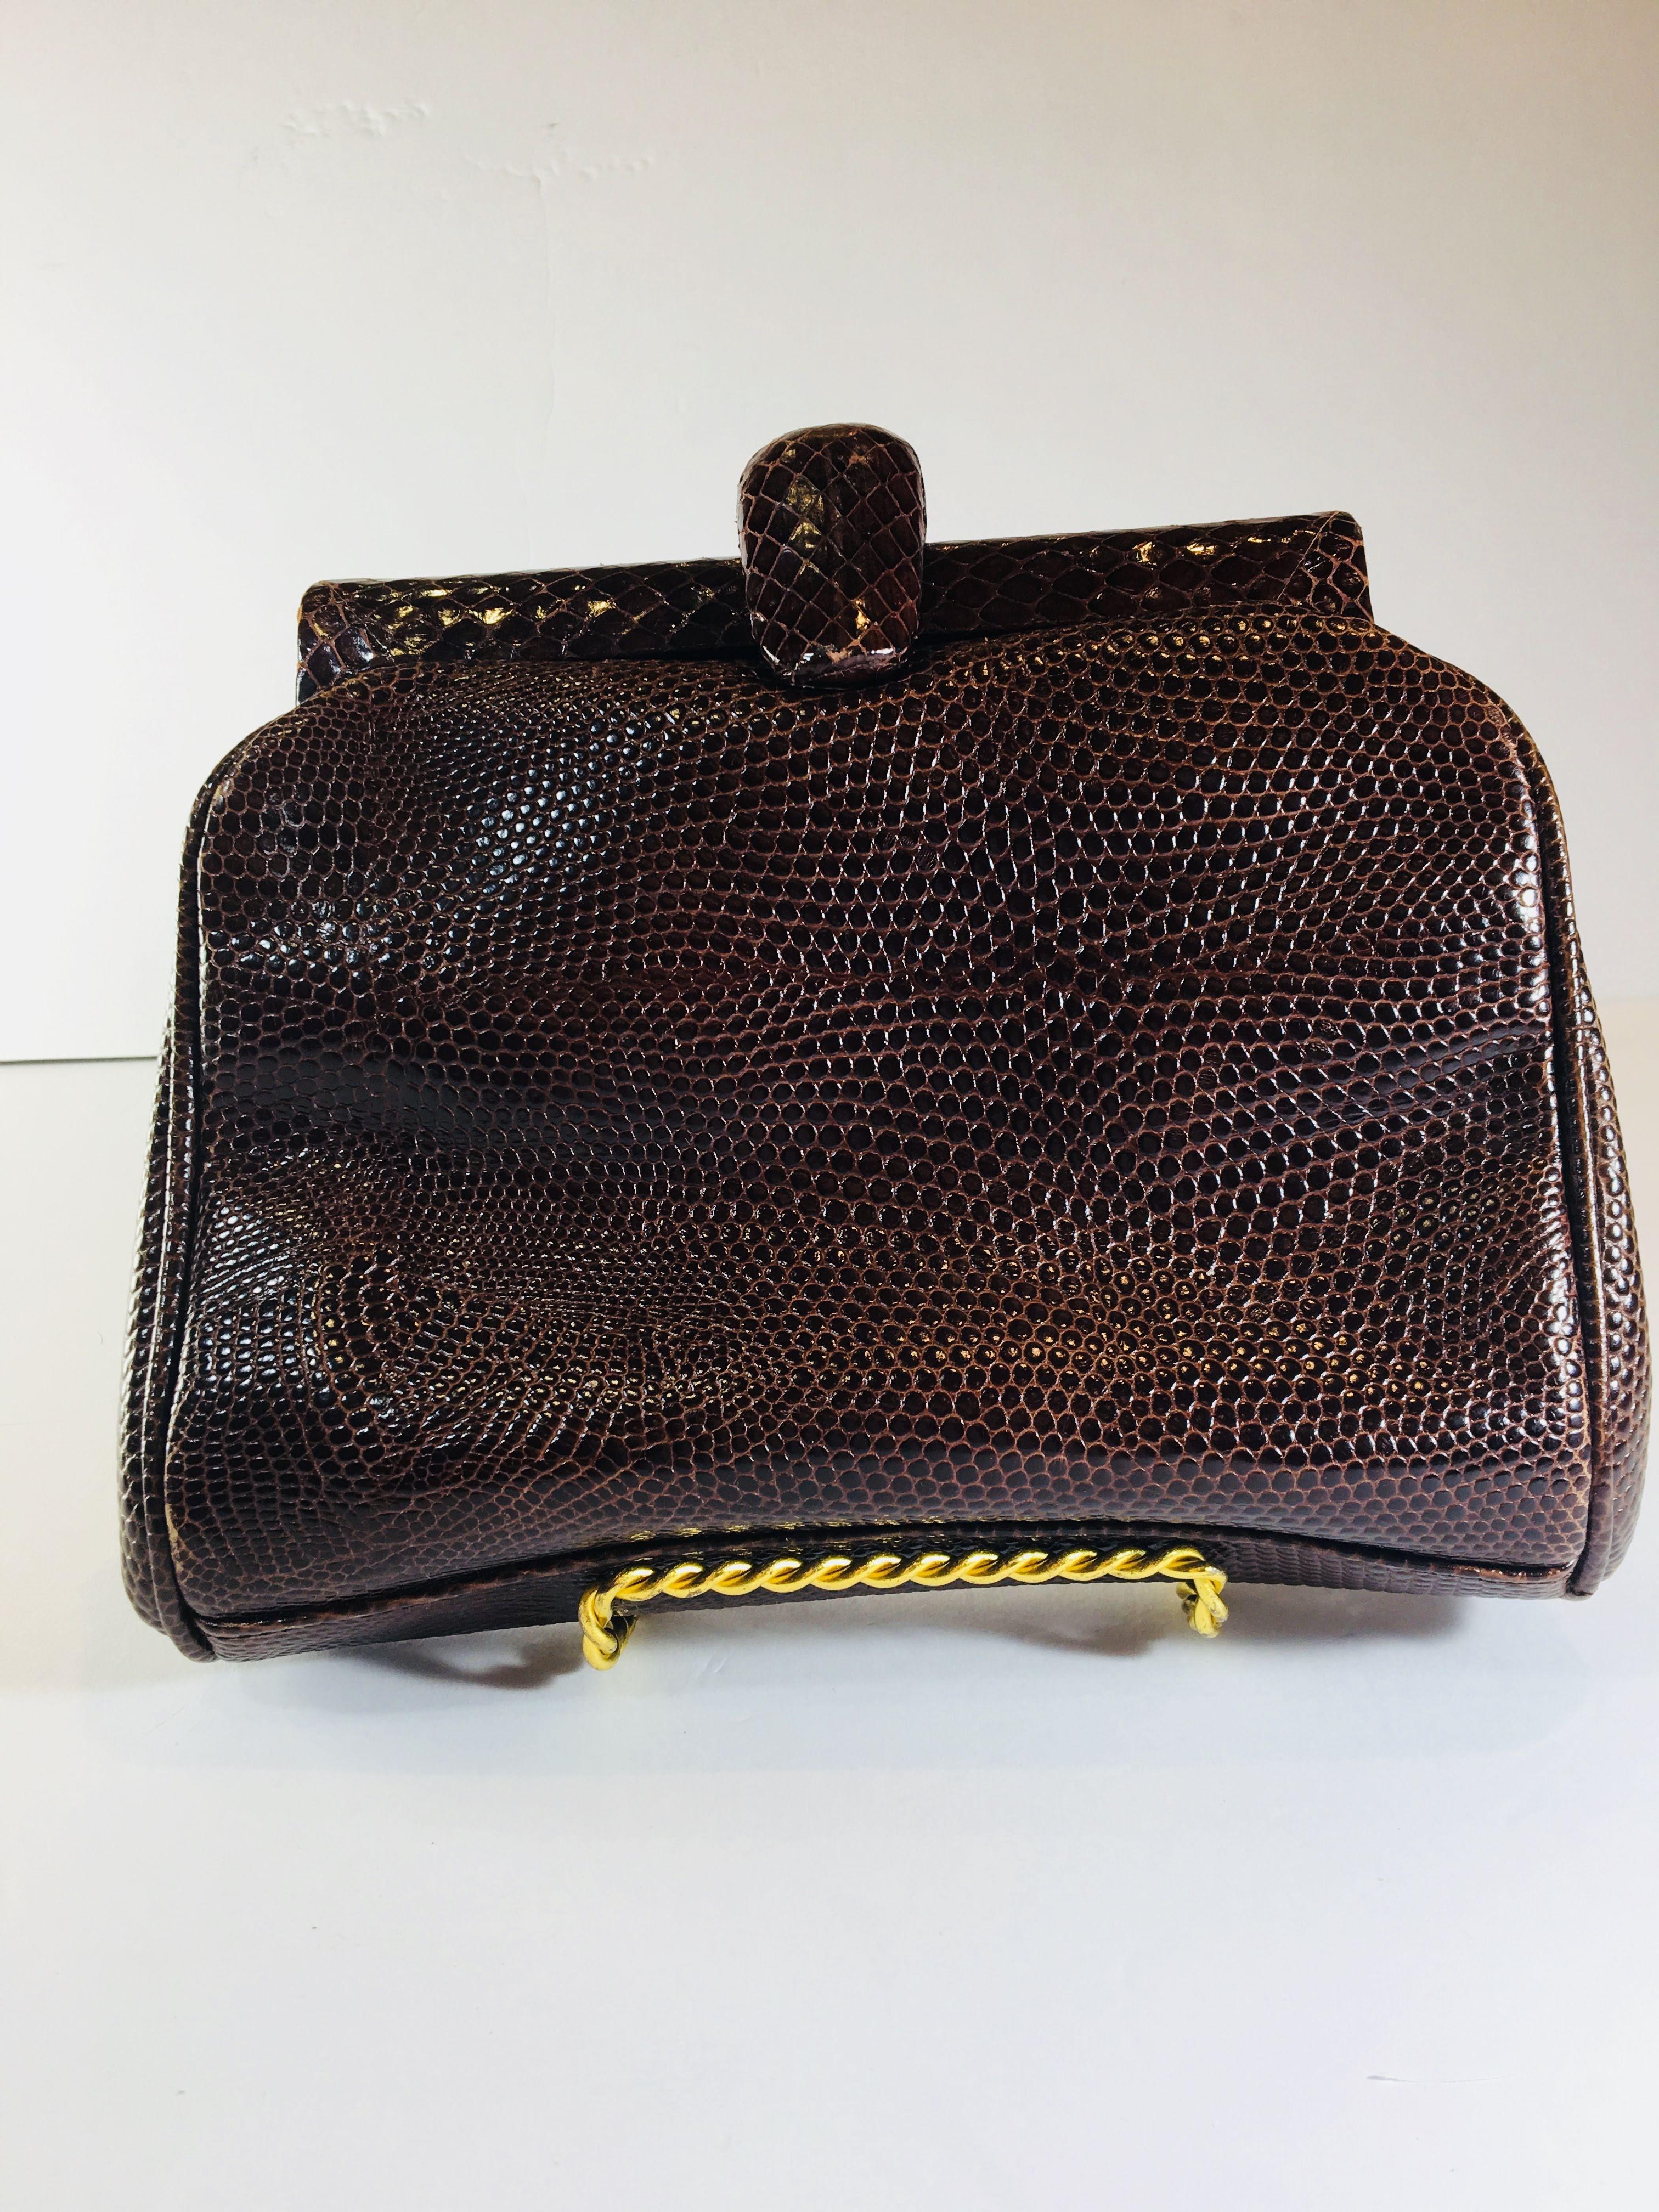 Women's or Men's Prada Embossed Leather Clutch